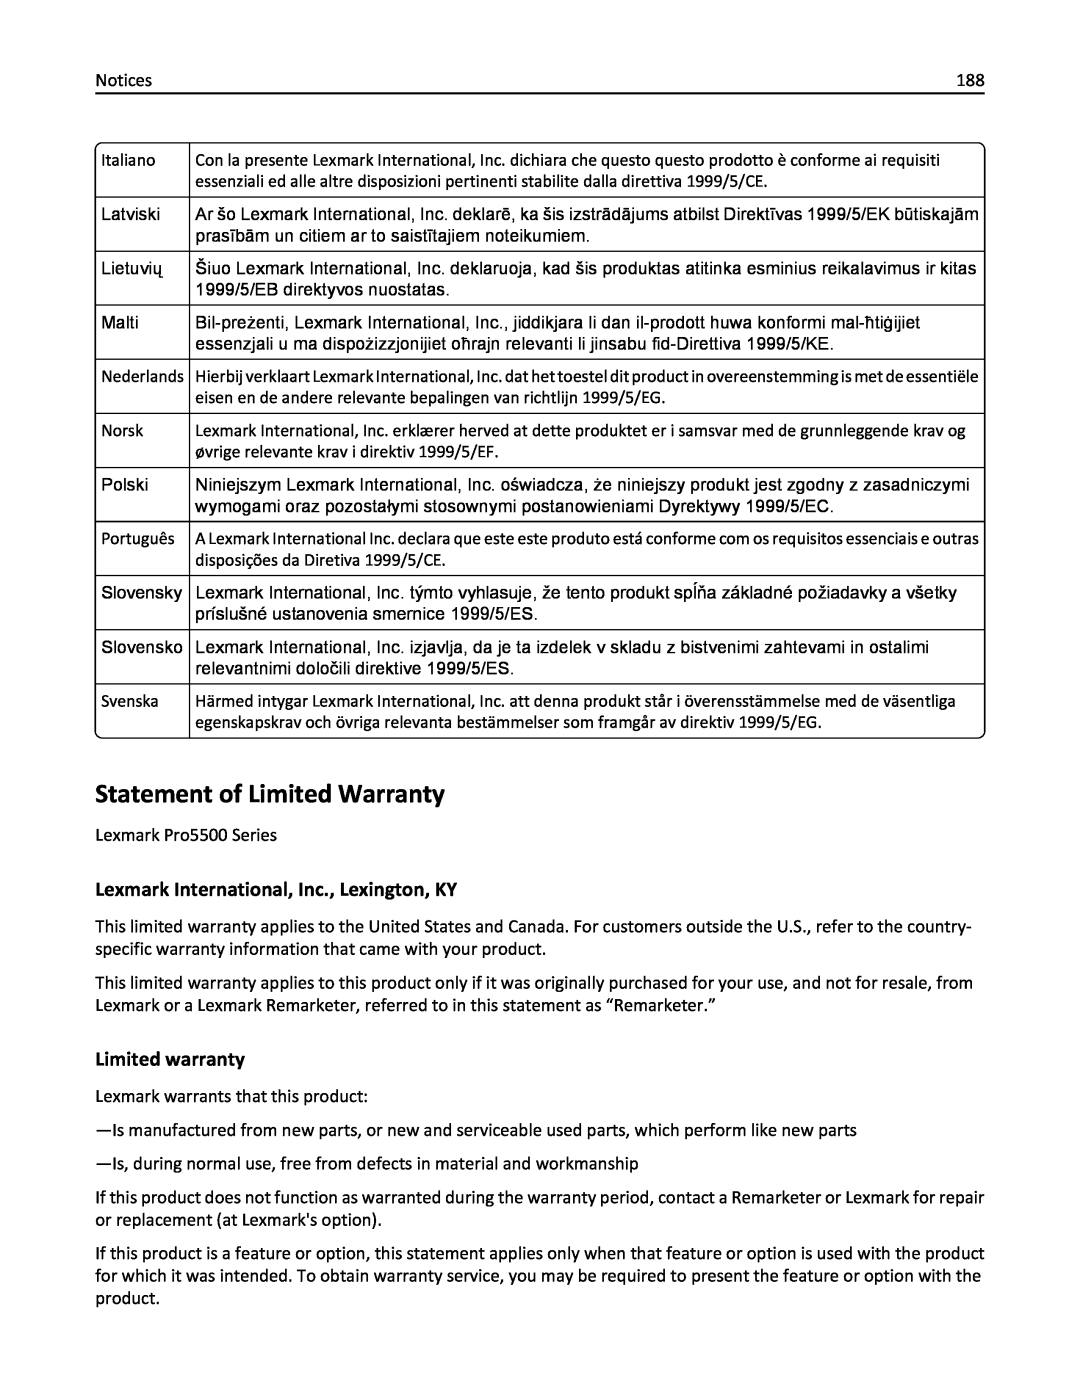 Lexmark 20E, 200 manual Statement of Limited Warranty, Lexmark International, Inc., Lexington, KY, Limited warranty 